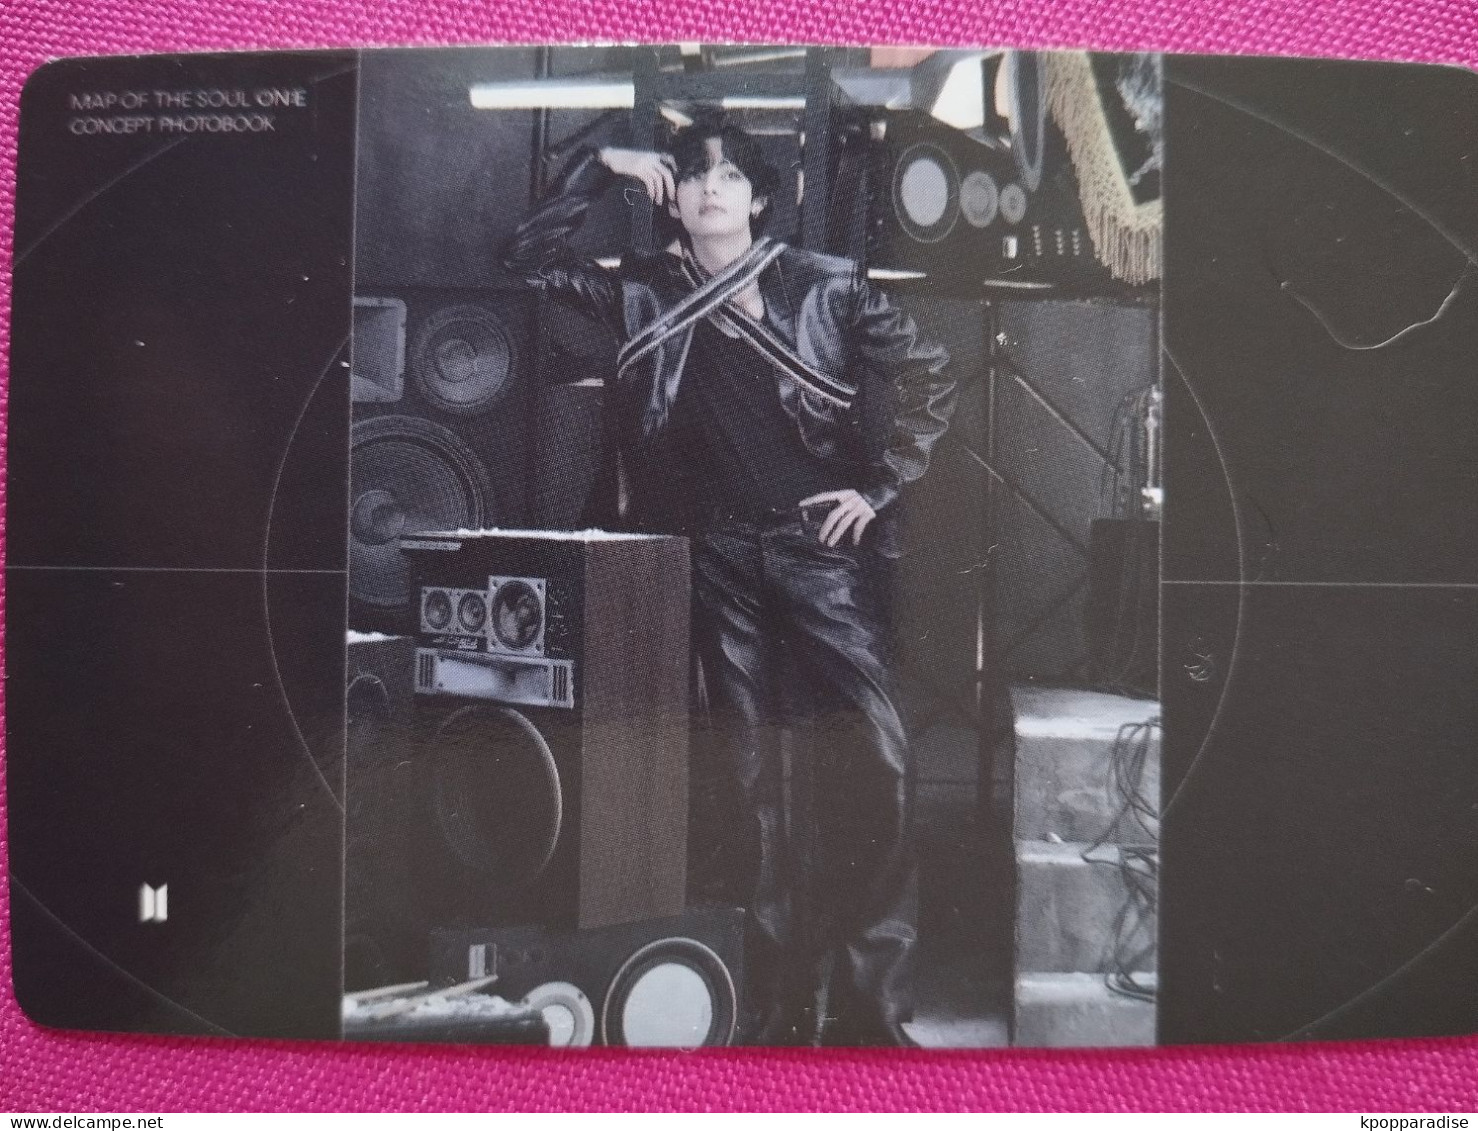 Photocard K POP au choix BTS Map of the soul one V Taehyung